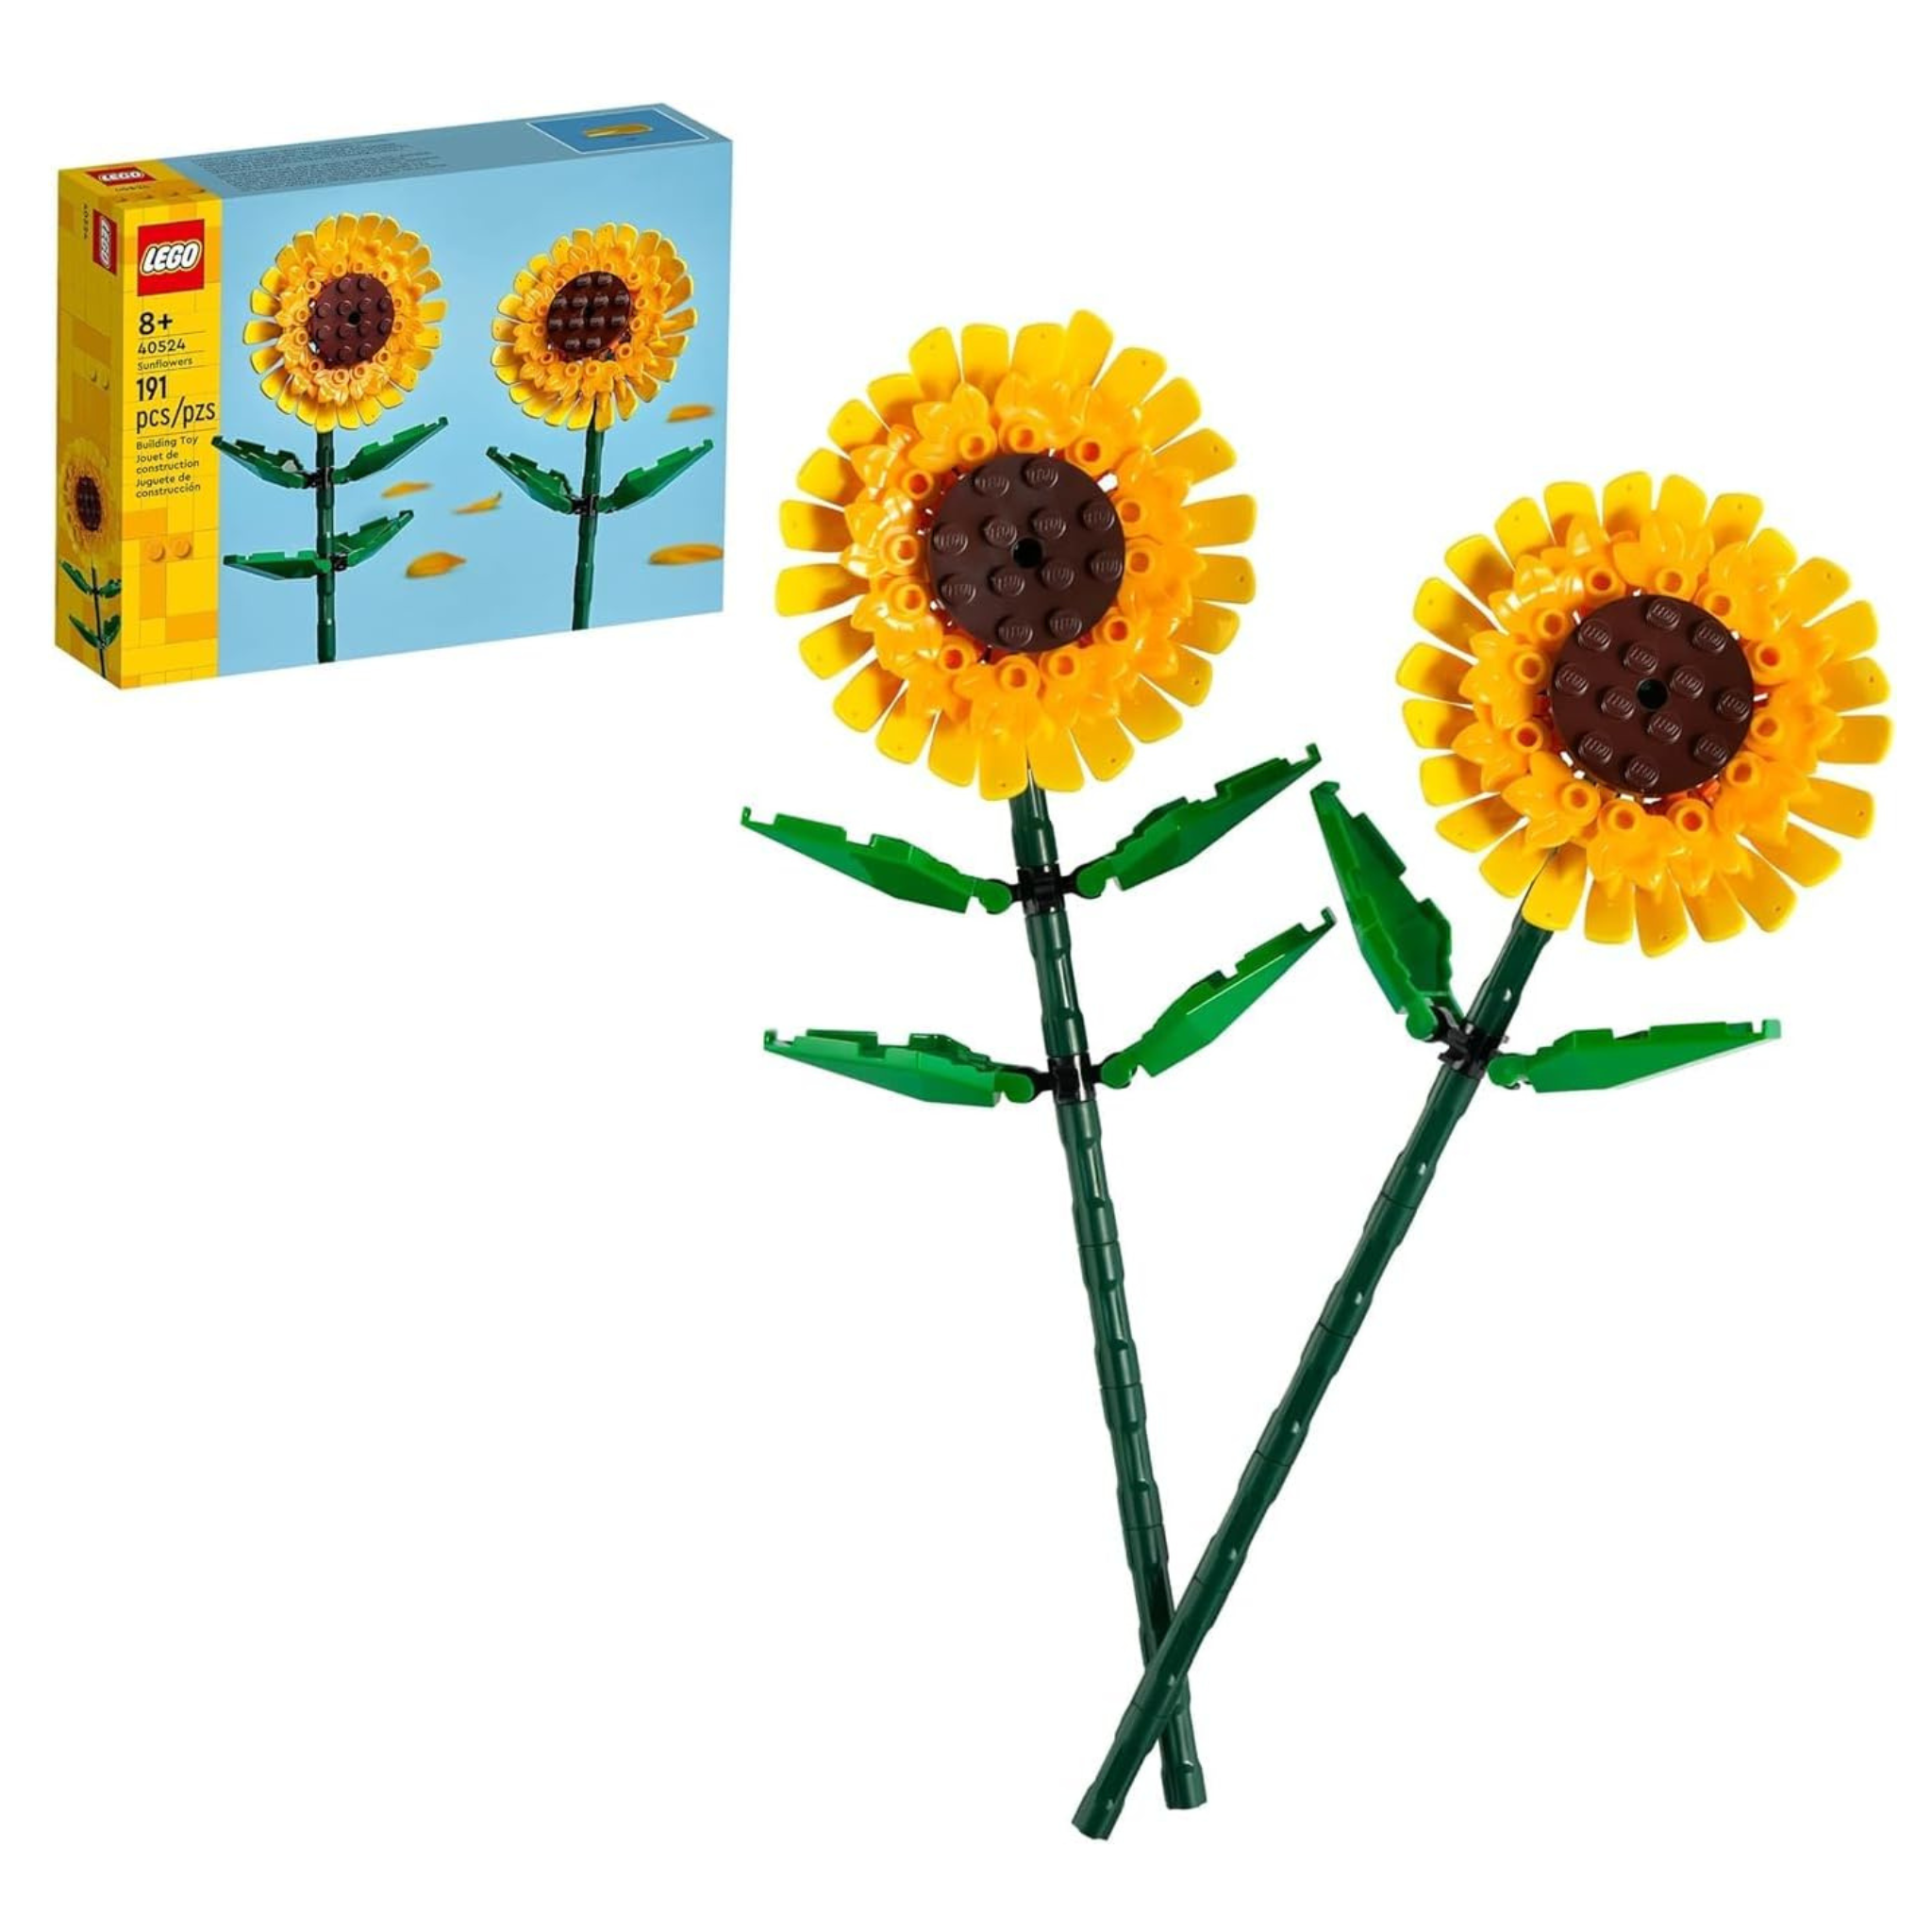 191-Piece LEGO Sunflowers Building Kit (40524)